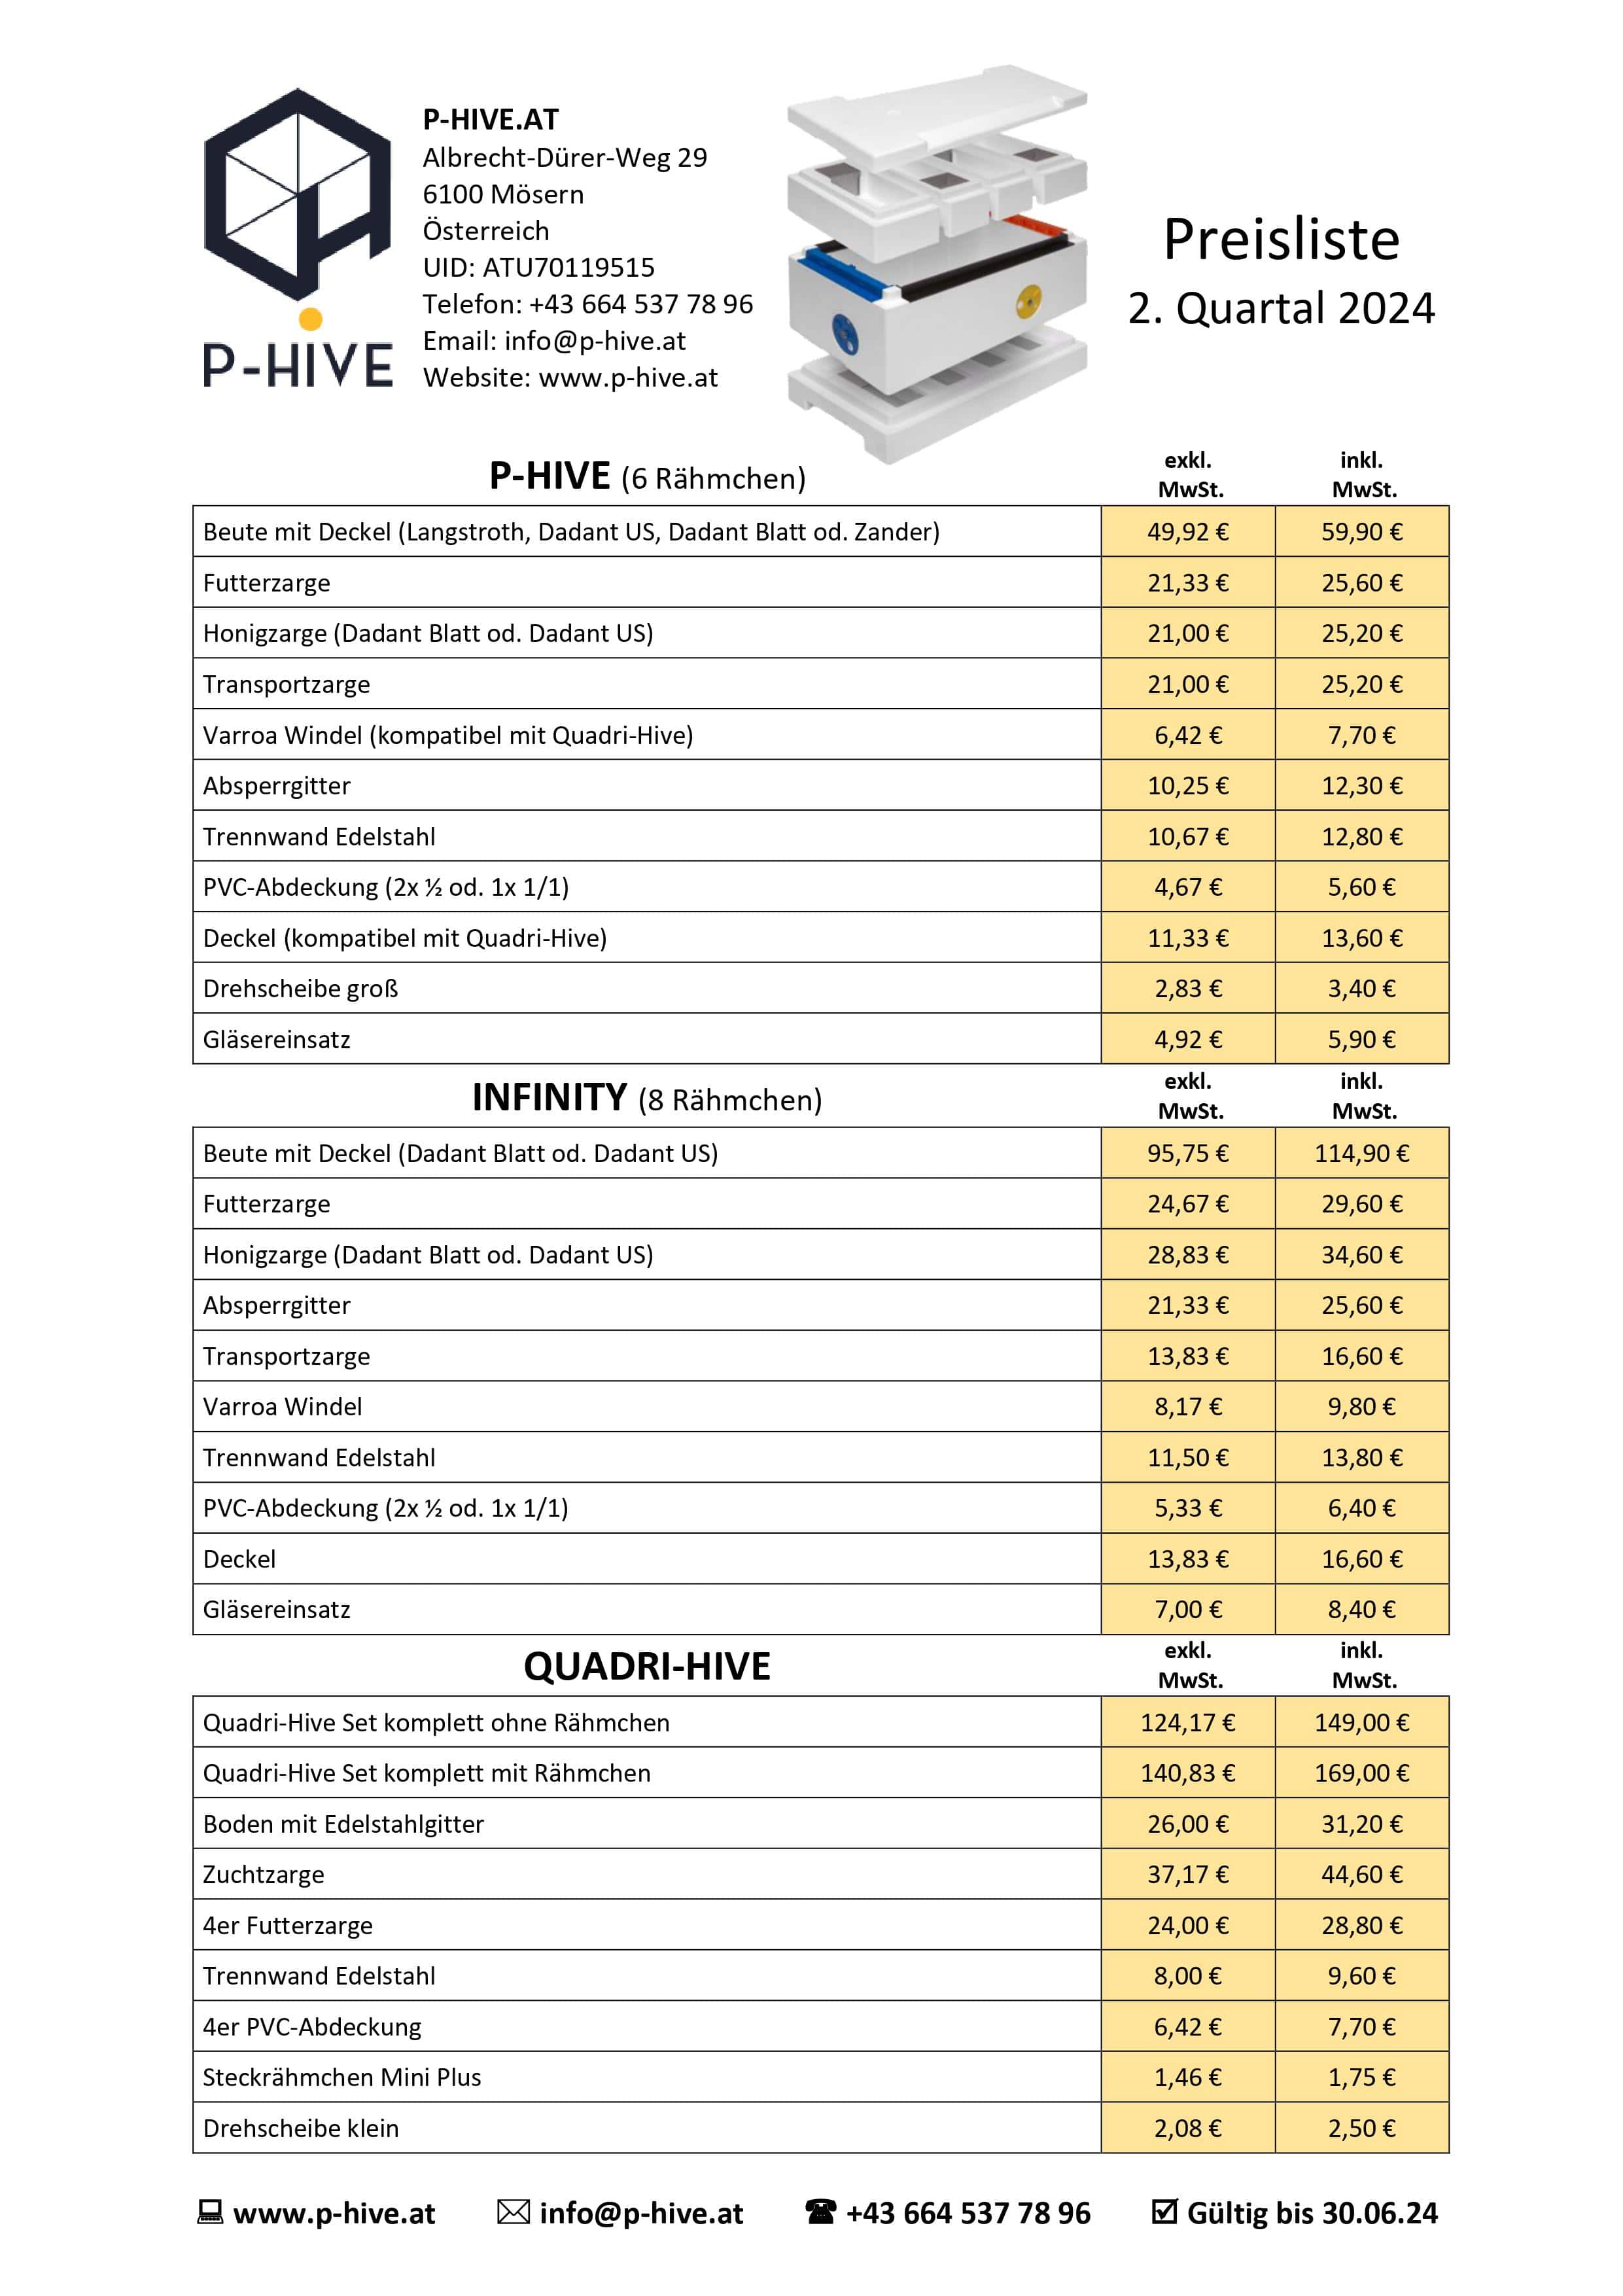 P-Hive Quadri Hive Infinity Preisliste